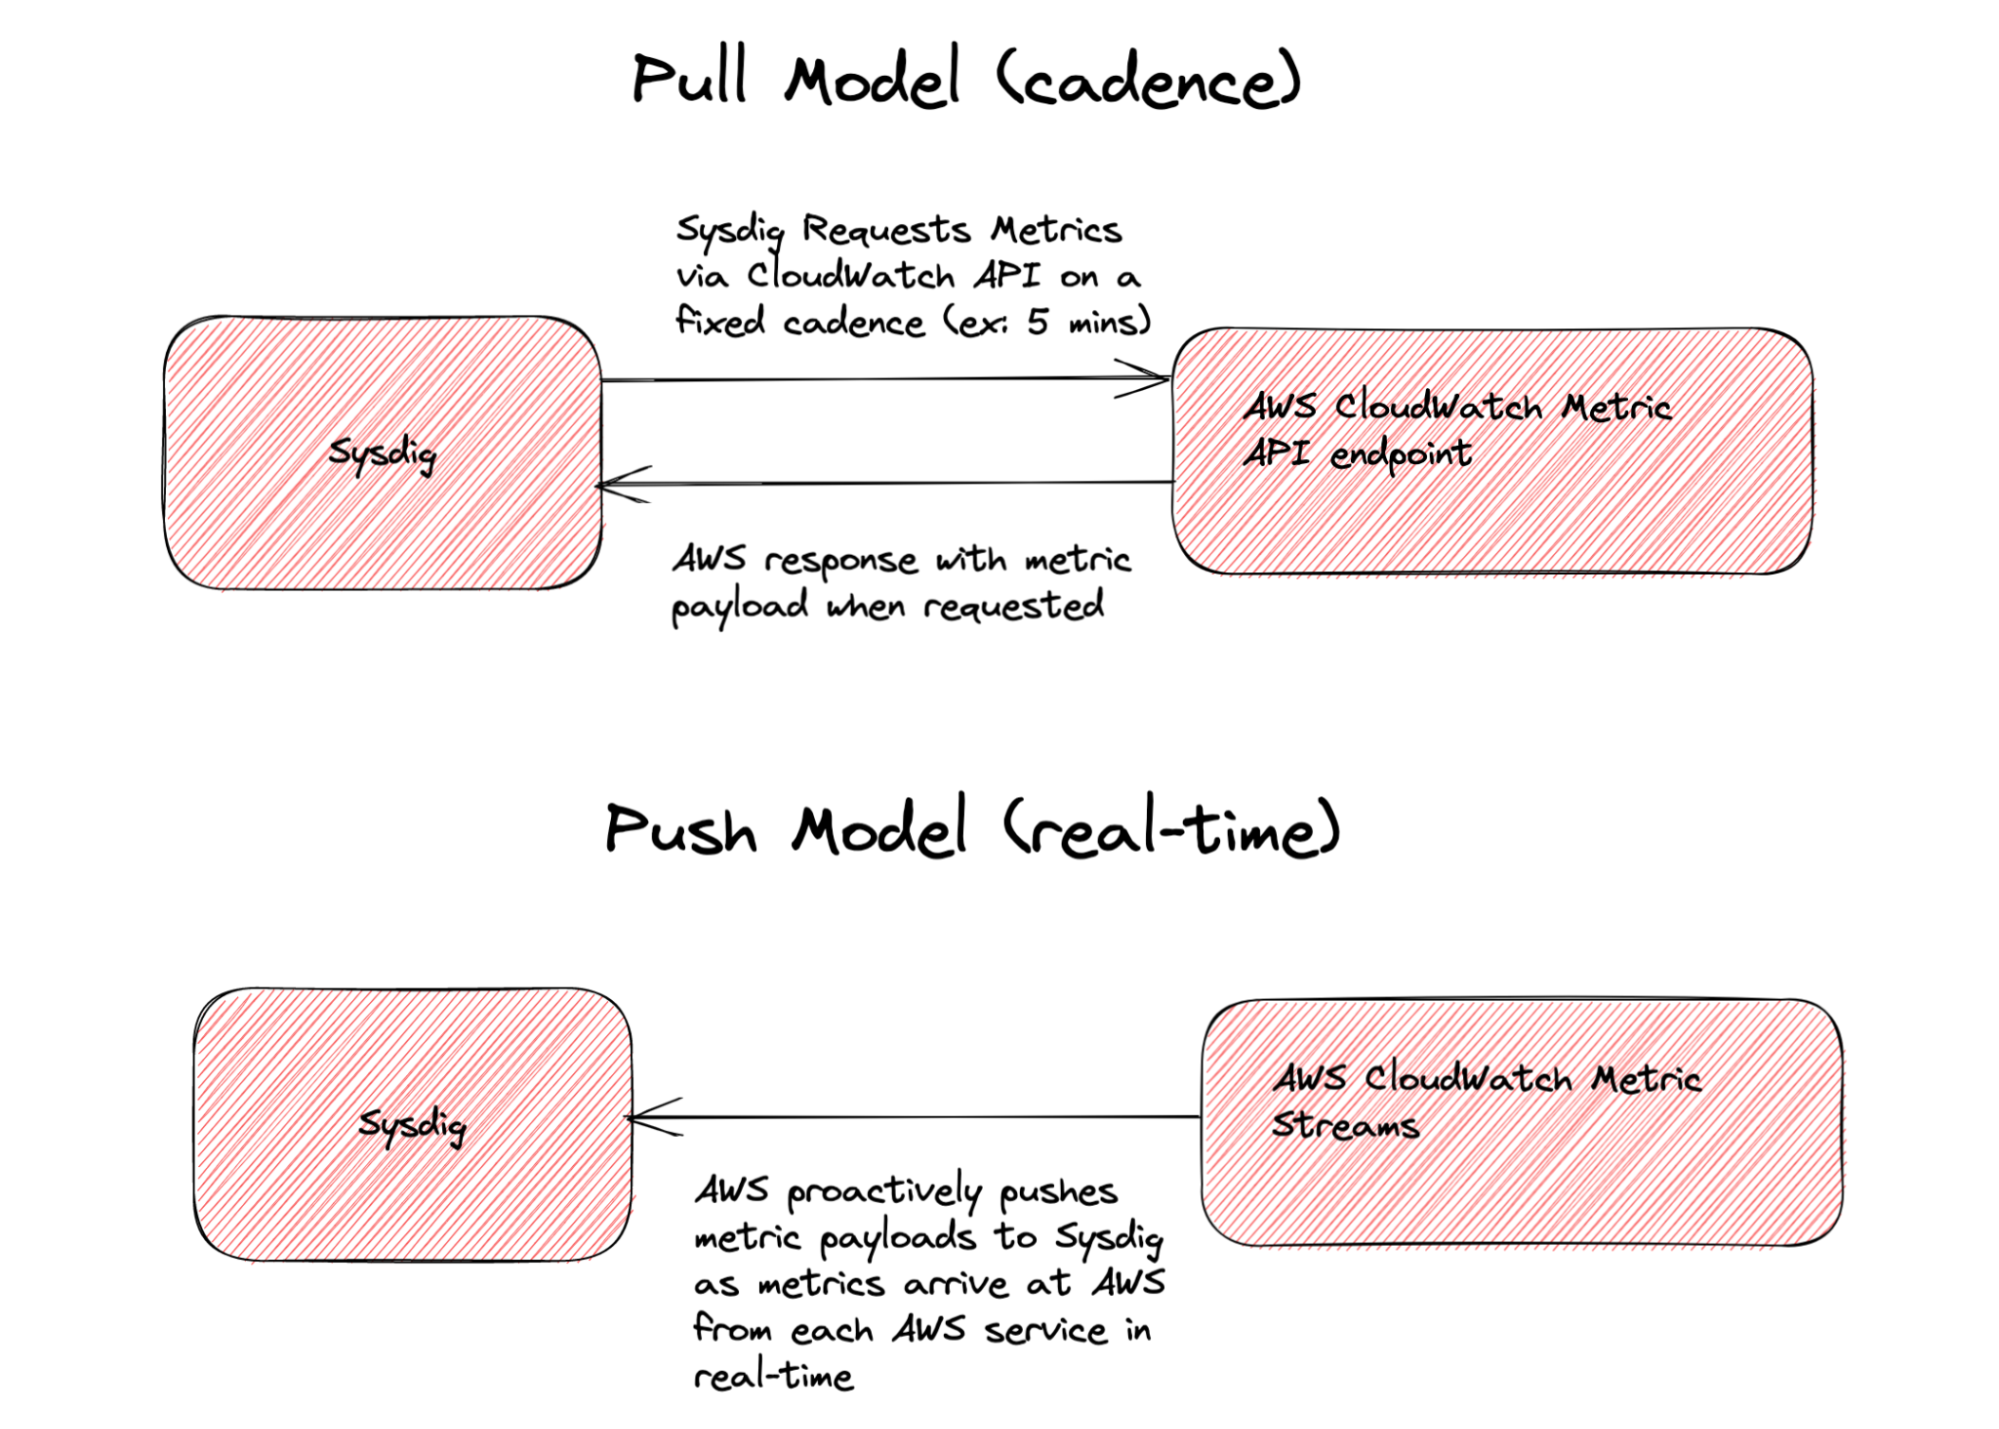 Pull model vs push model. Pull model is more optimal, as data is sent in real-time.